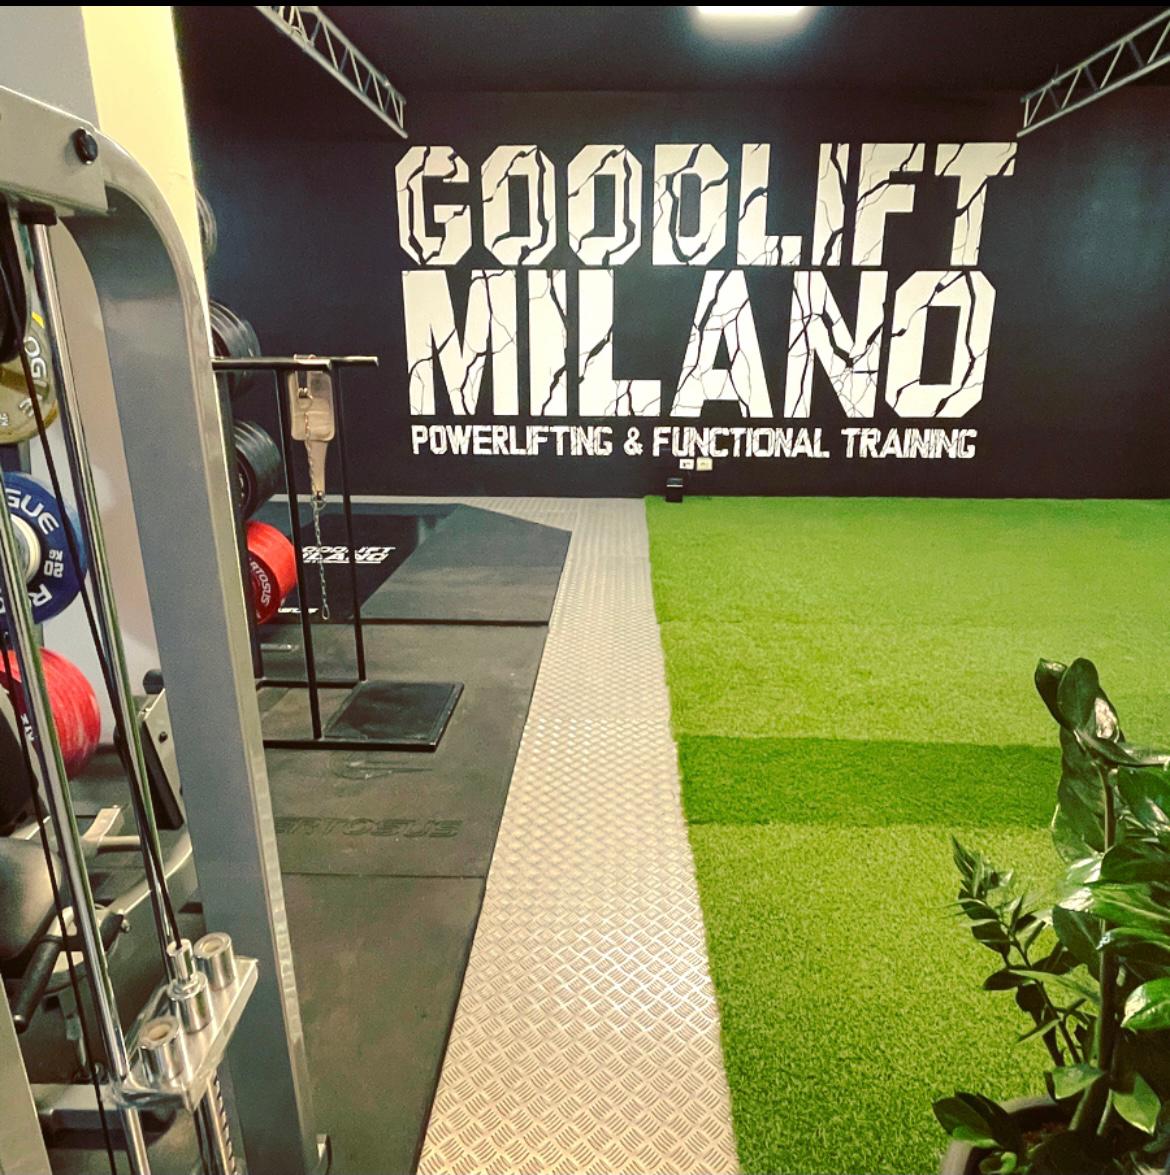 corridoio ingresso palestra Goodlift Milano